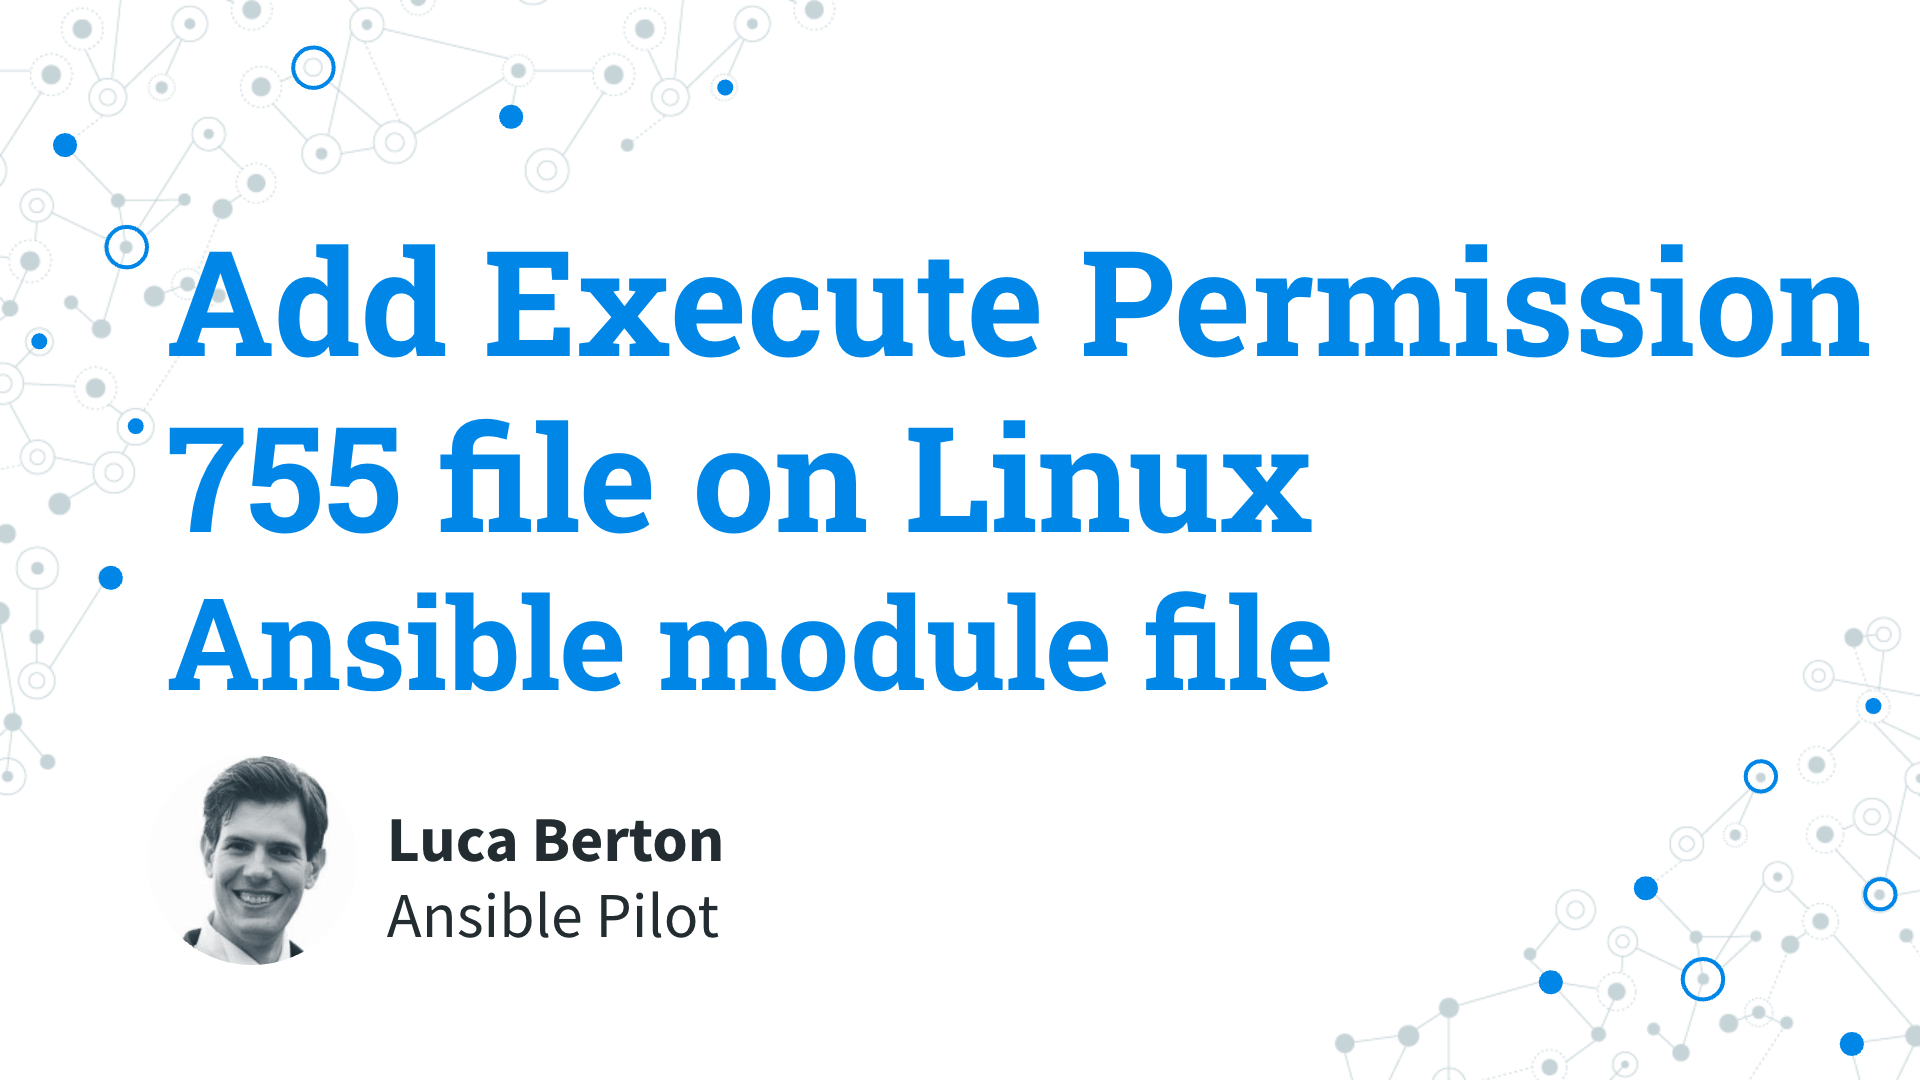 Add Execute Permission 755 Linux file - Ansible module file